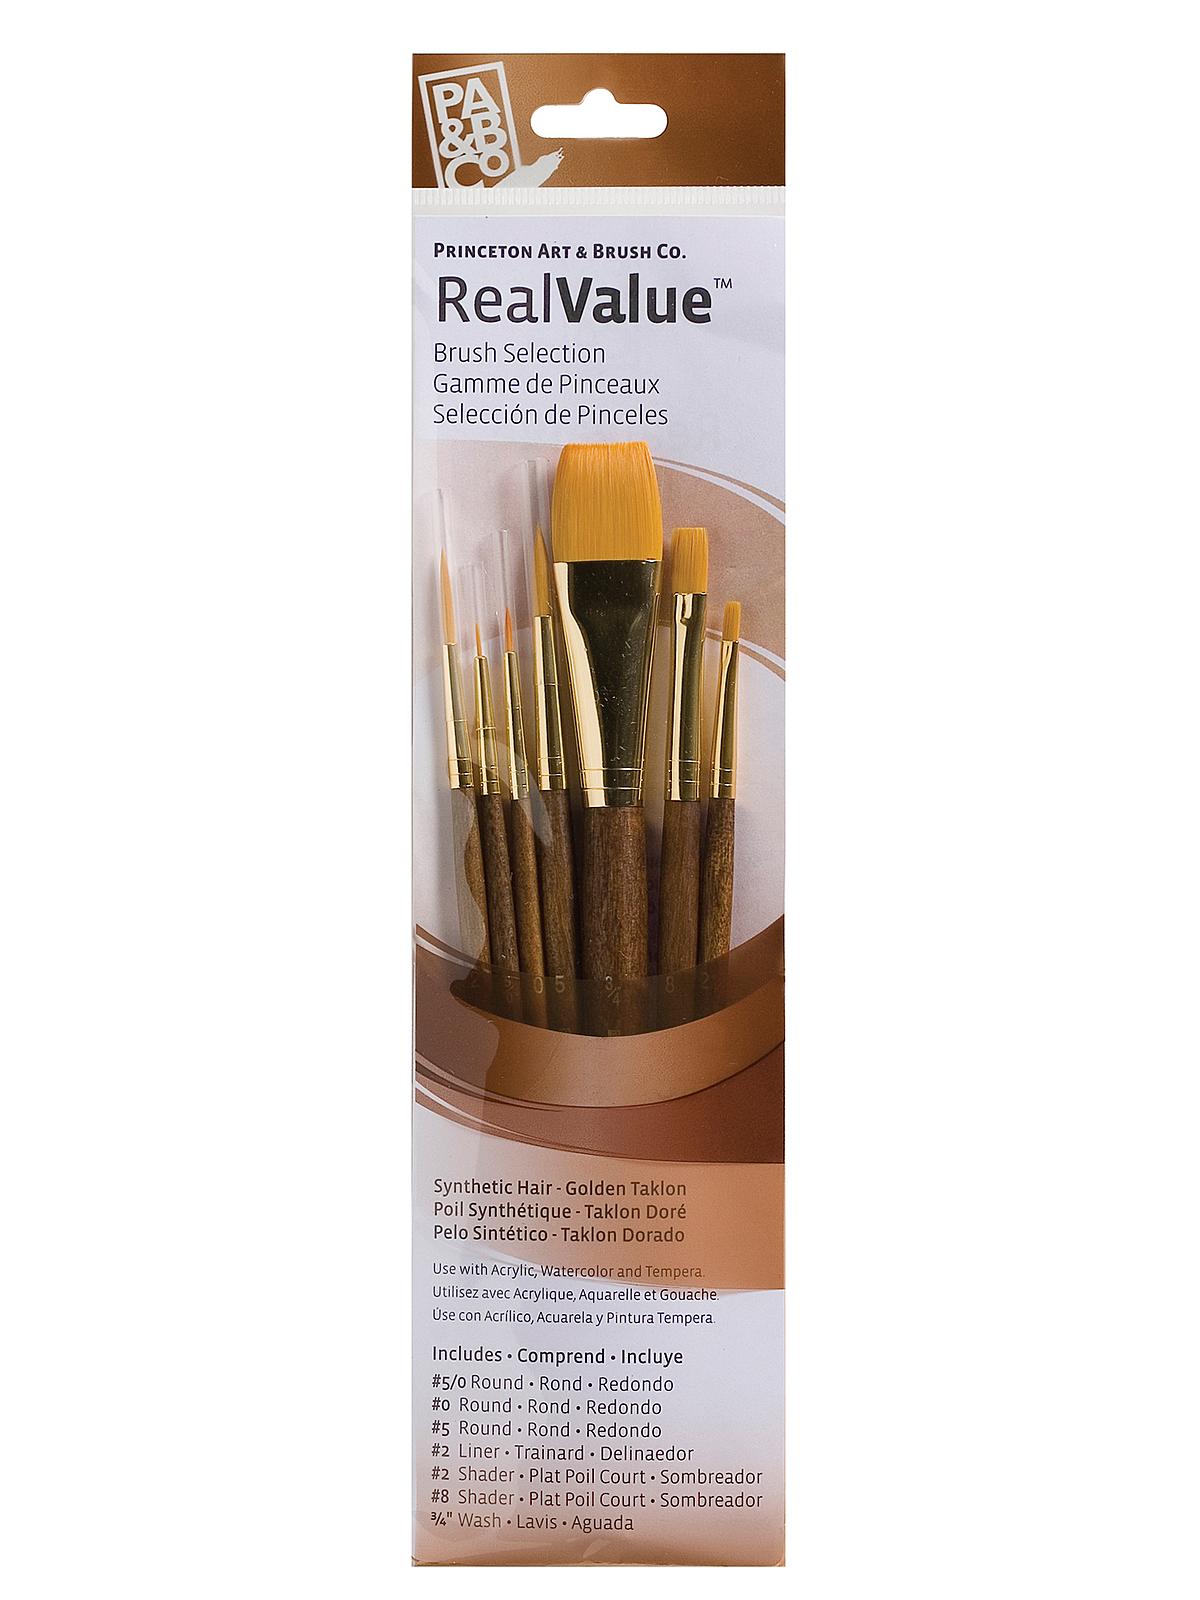 Real Value Series 9000 Brown Handled Brush Sets 9141 Set Of 7